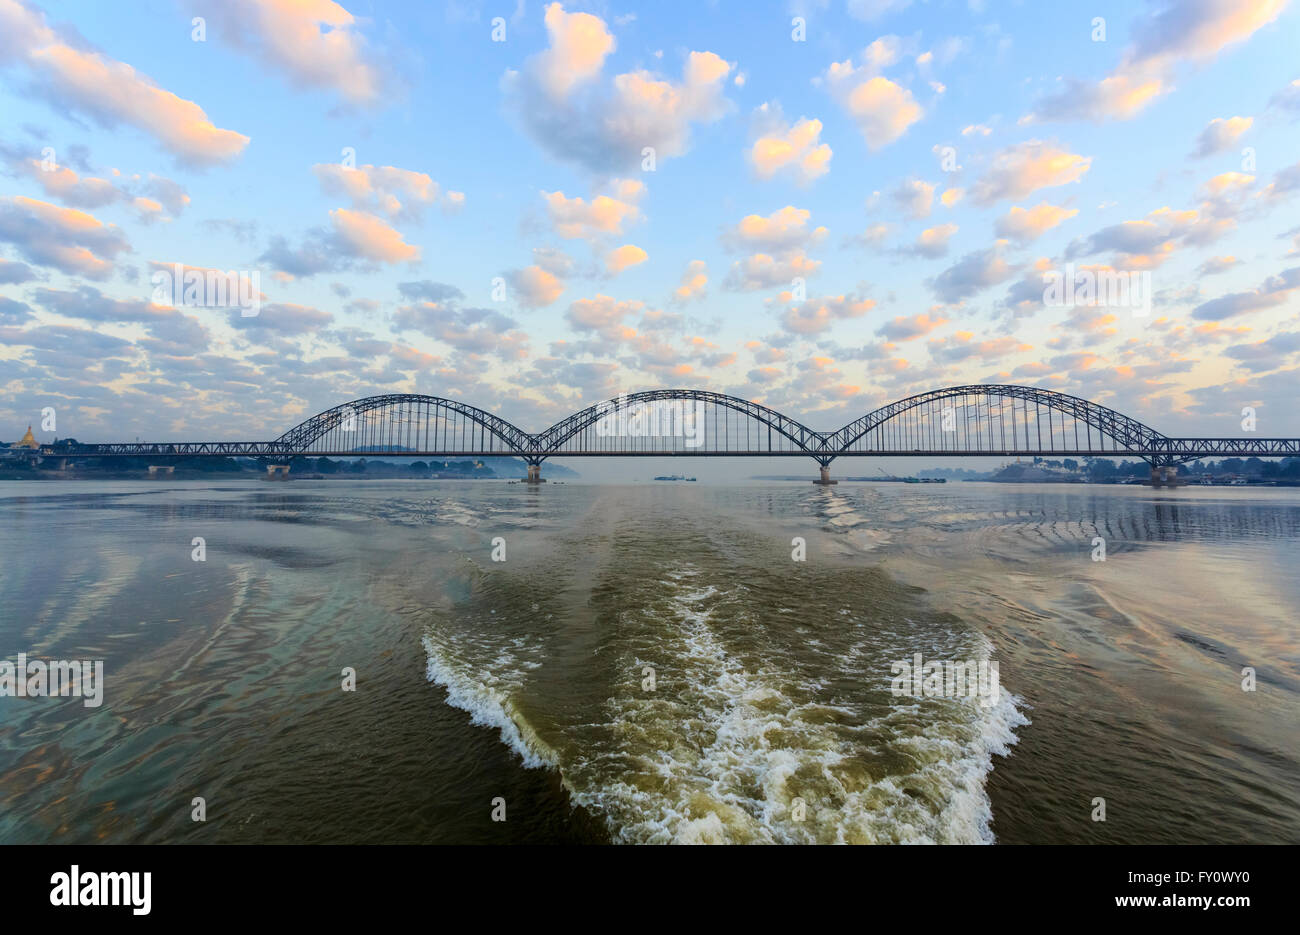 Irrawaddy (or Yadanabon ) Bridge over the Irrawaddy River, Sagaing, near Mandalay, Myanmar (Burma) Stock Photo